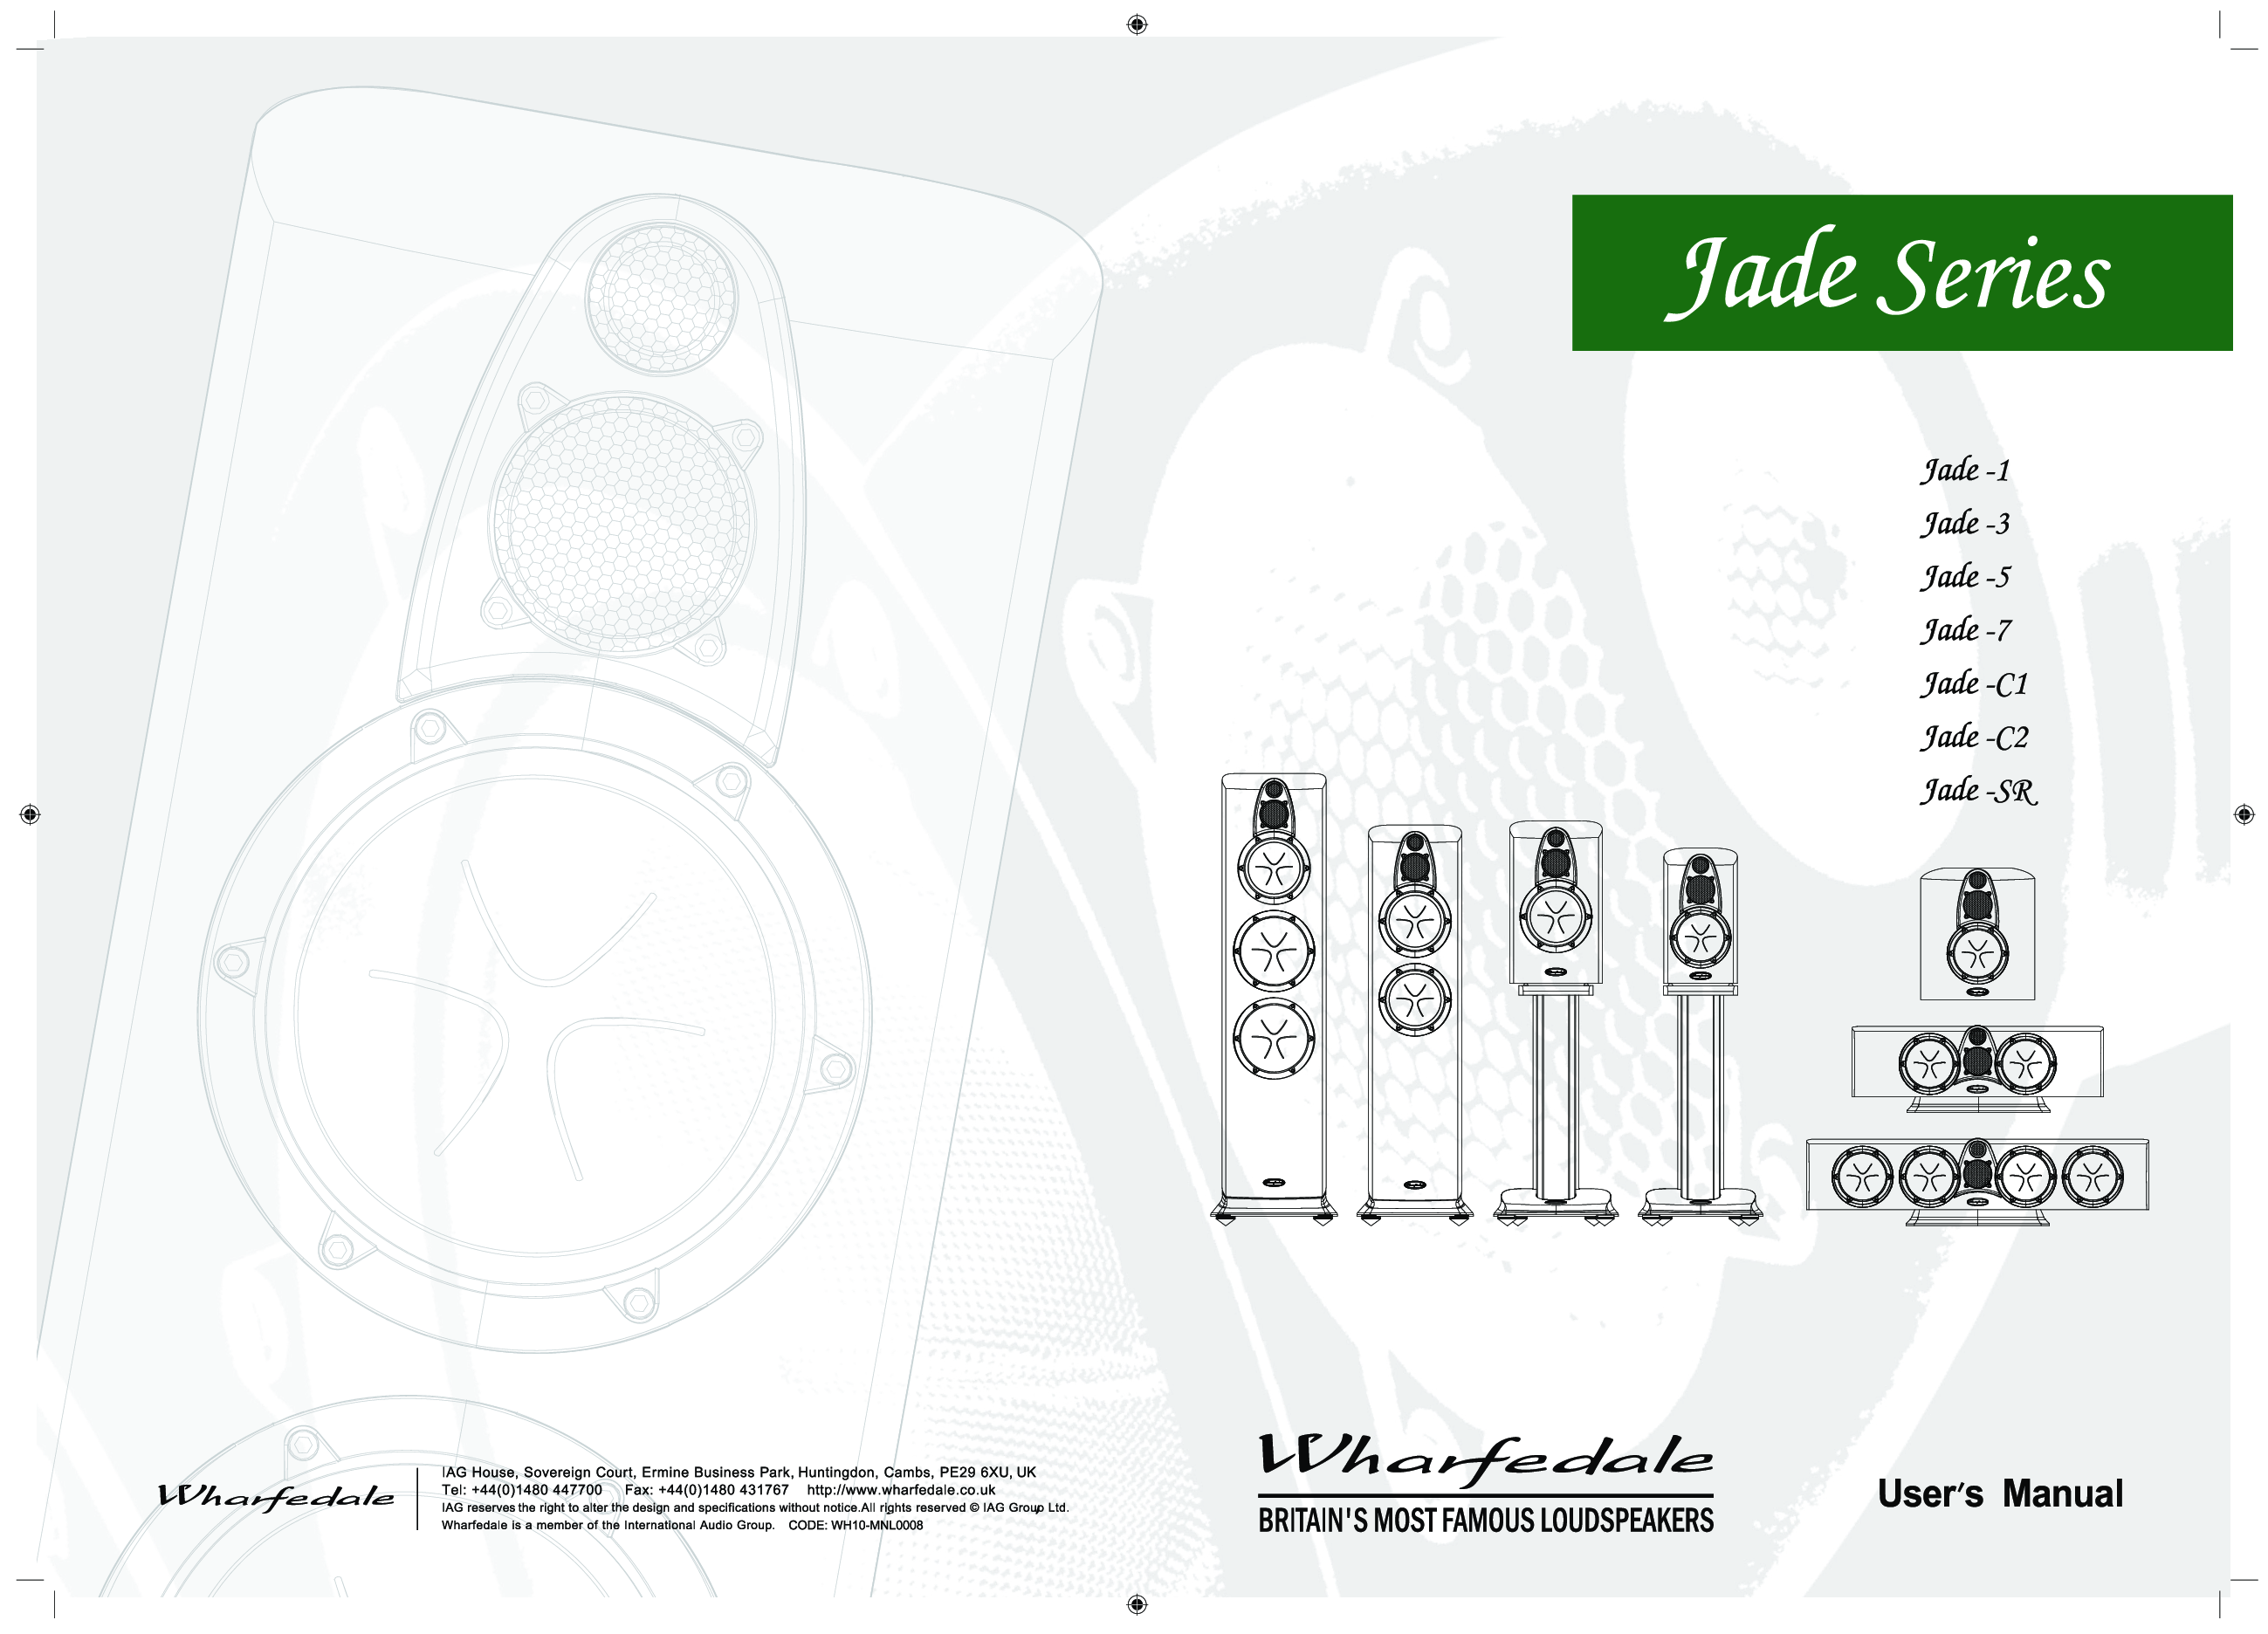 Wharfedale JADE-7, JADE-3, JADE-SR, JADE-C2, JADE-5 User Manual